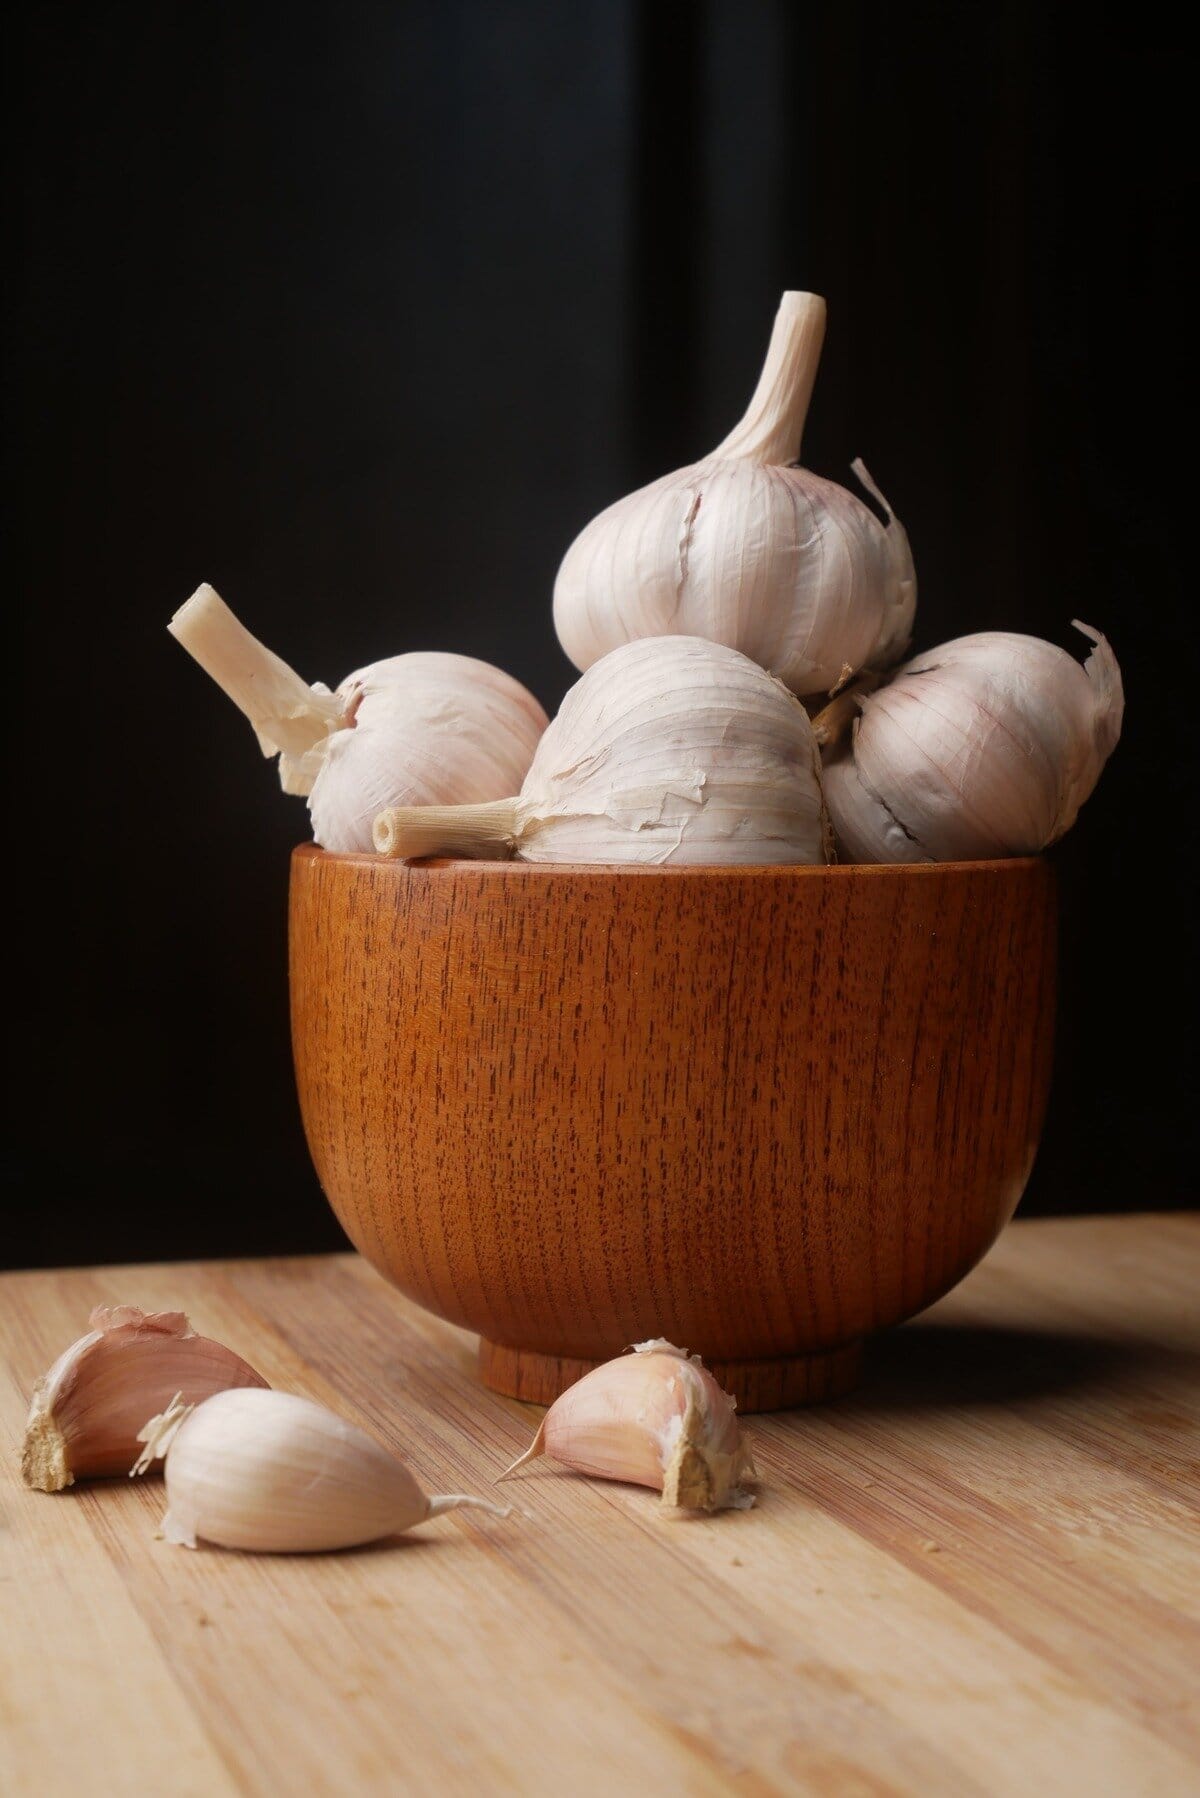 What Does Garlic Taste Like? Does Garlic Taste Good?